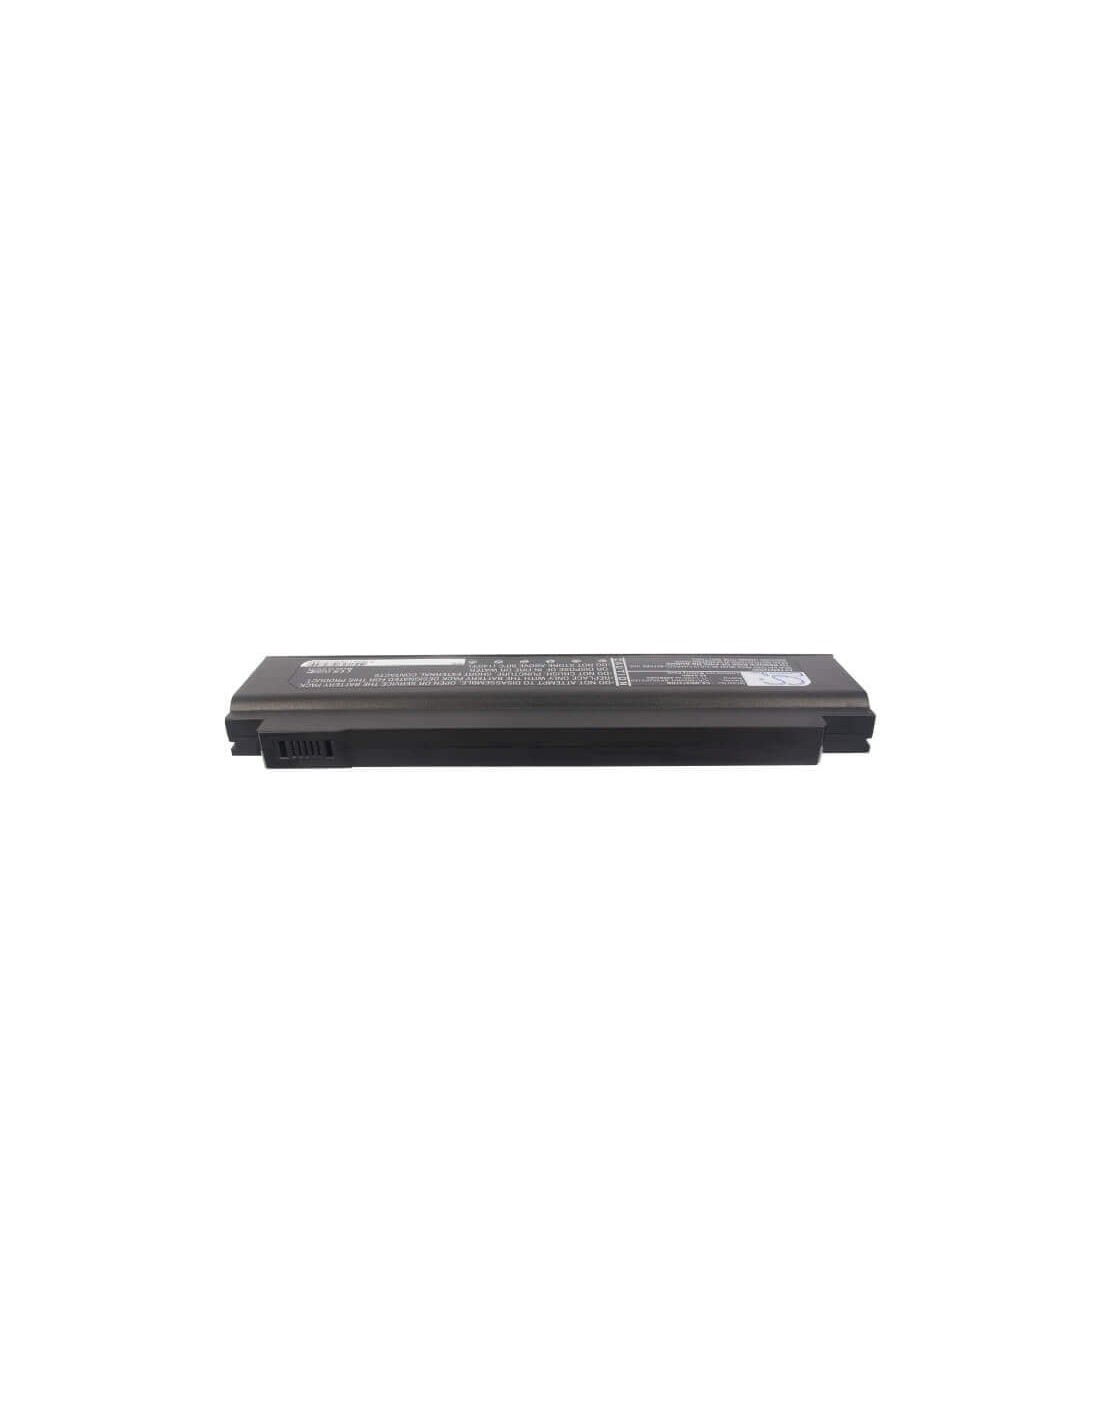 Black Battery for Medion Akoya E3211, Md97378, Md97193 11.1V, 4400mAh - 48.84Wh